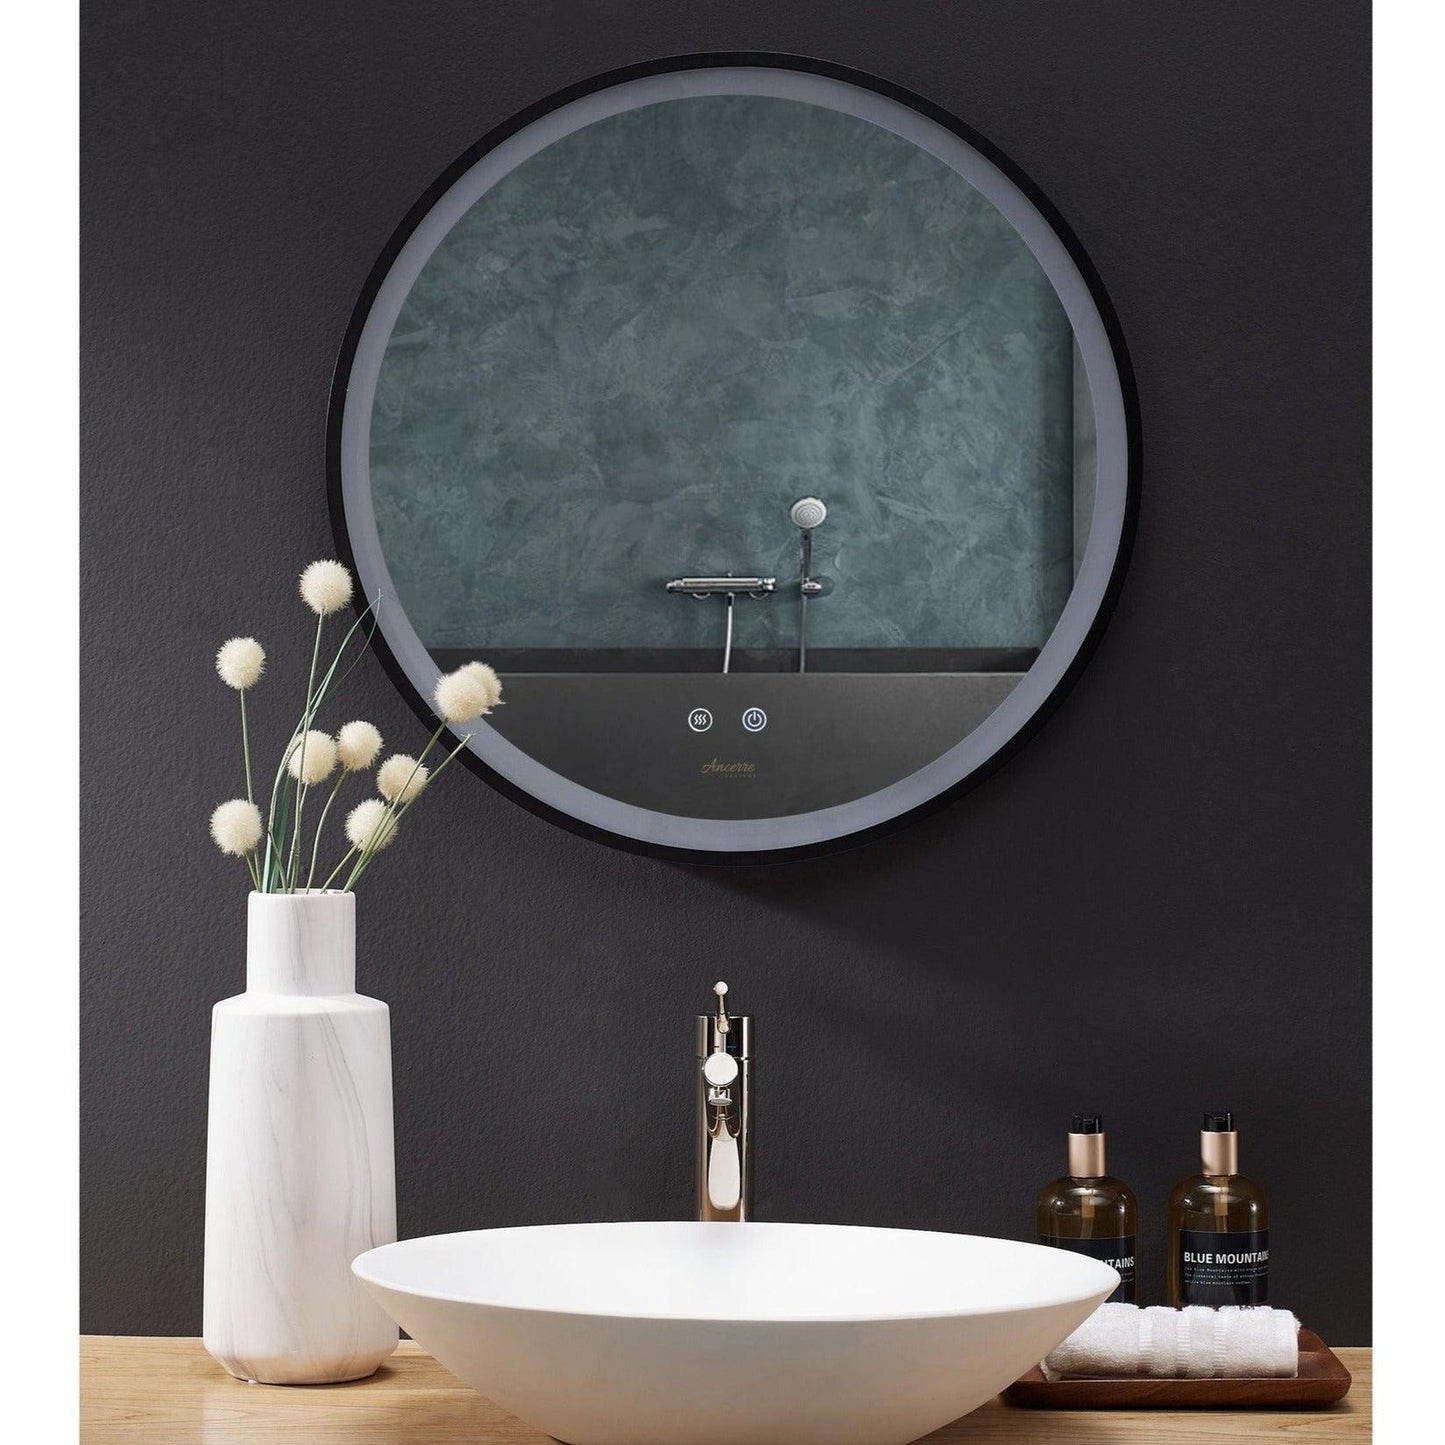 Ancerre Designs Cirque 24" Modern Round LED Lighted Black Framed Bathroom Vanity Mirror With Defogger, Dimmer and Mounting Hardware